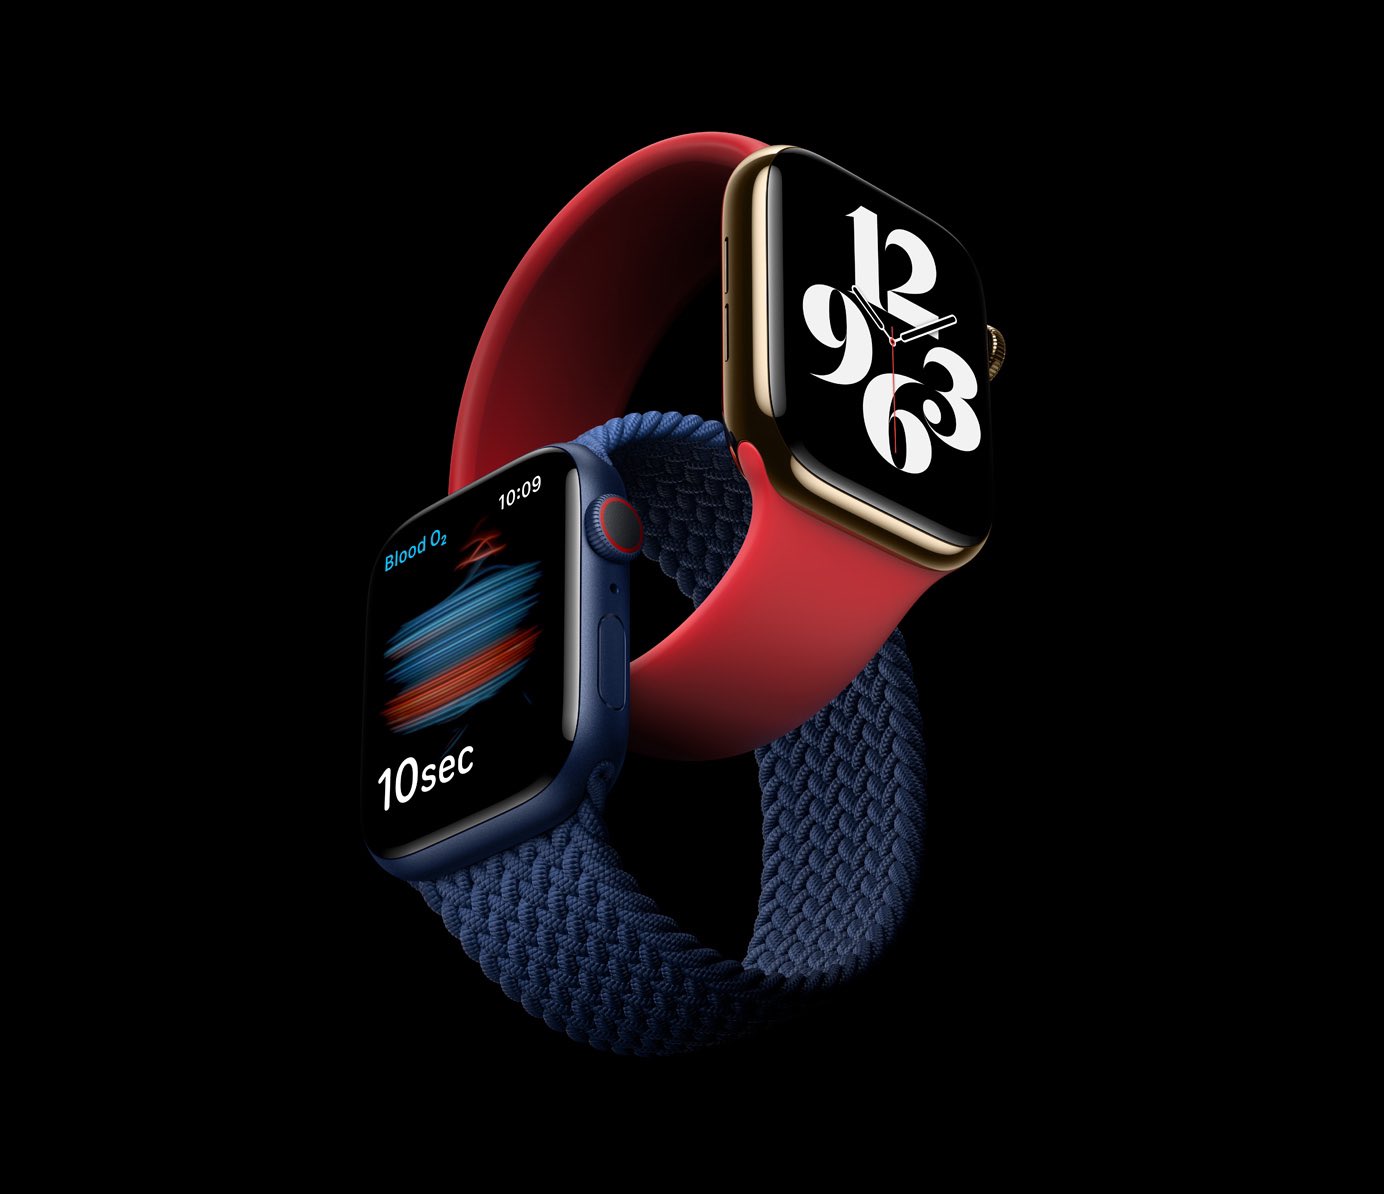 8th gen iPad, Apple Watch Series 6, Watch SE go on sale in India via Apple Store online